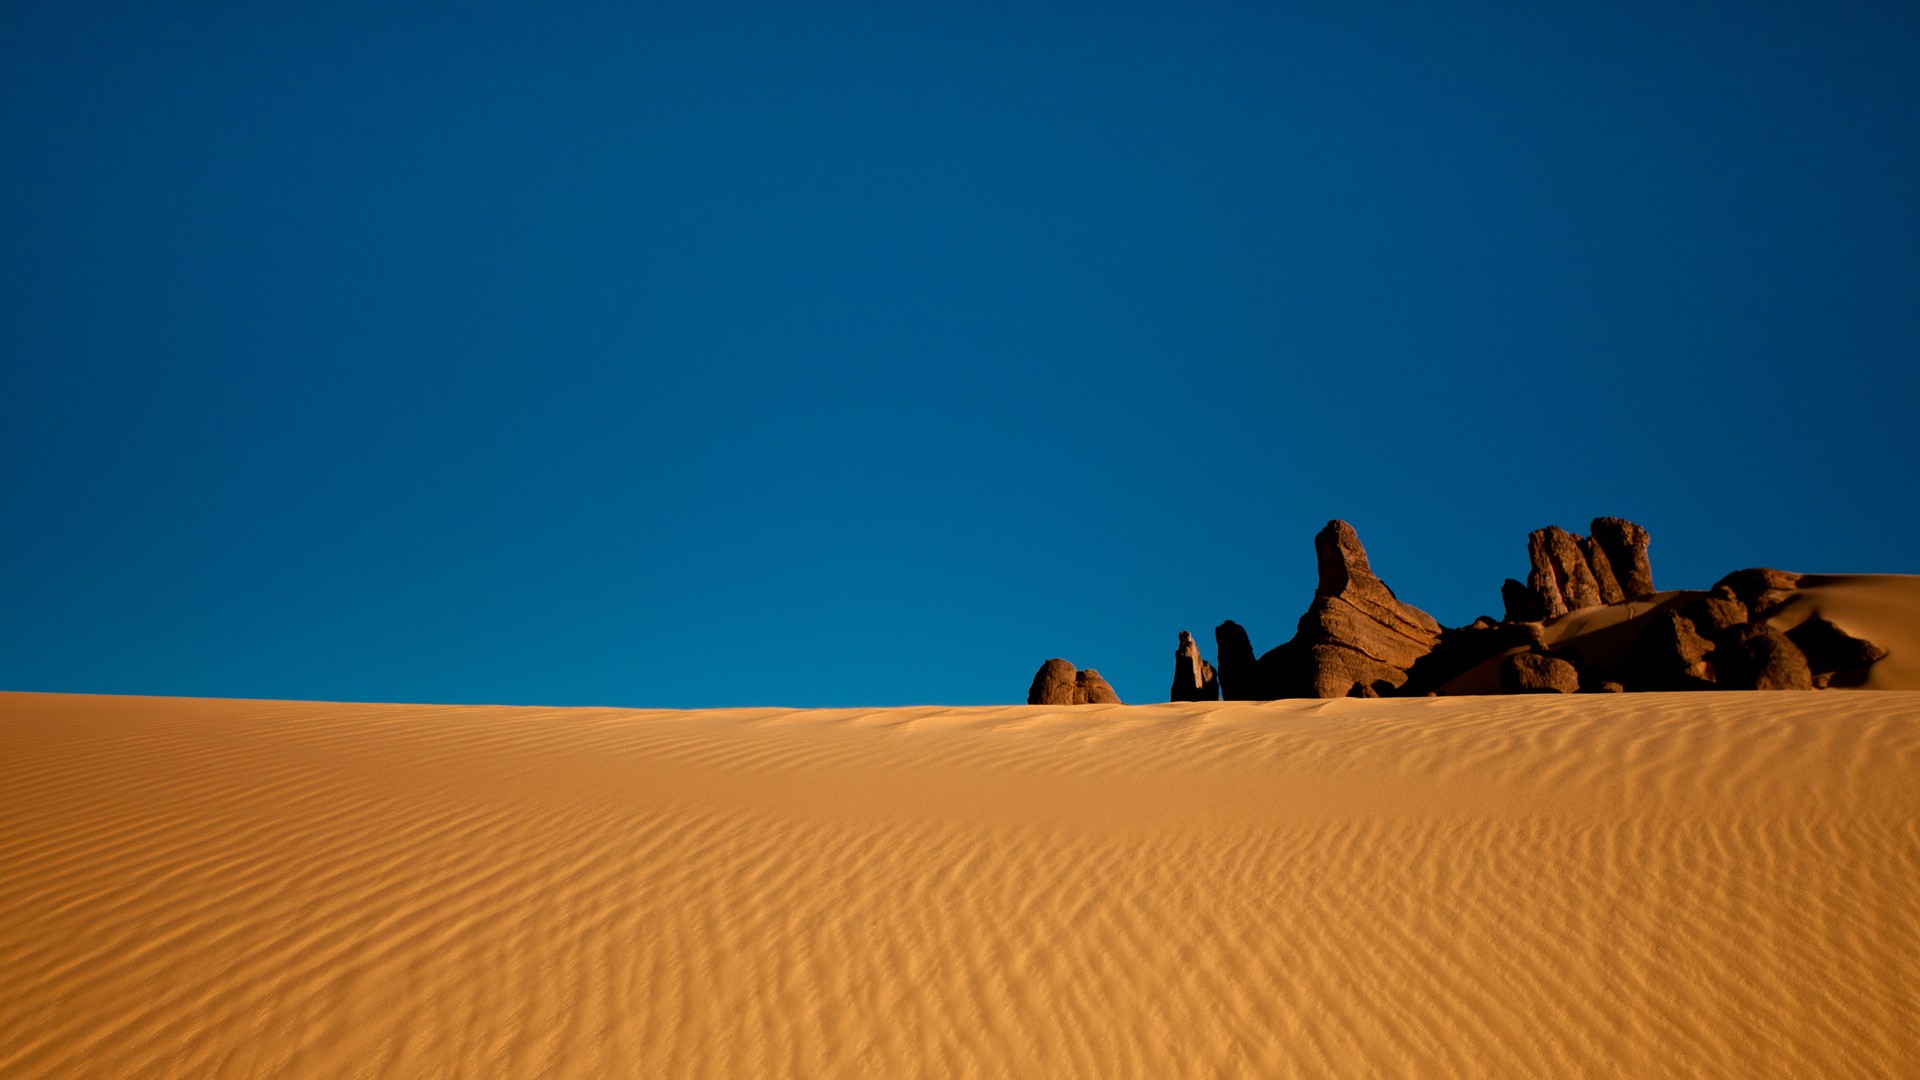 General 1920x1080 nature landscape desert dunes